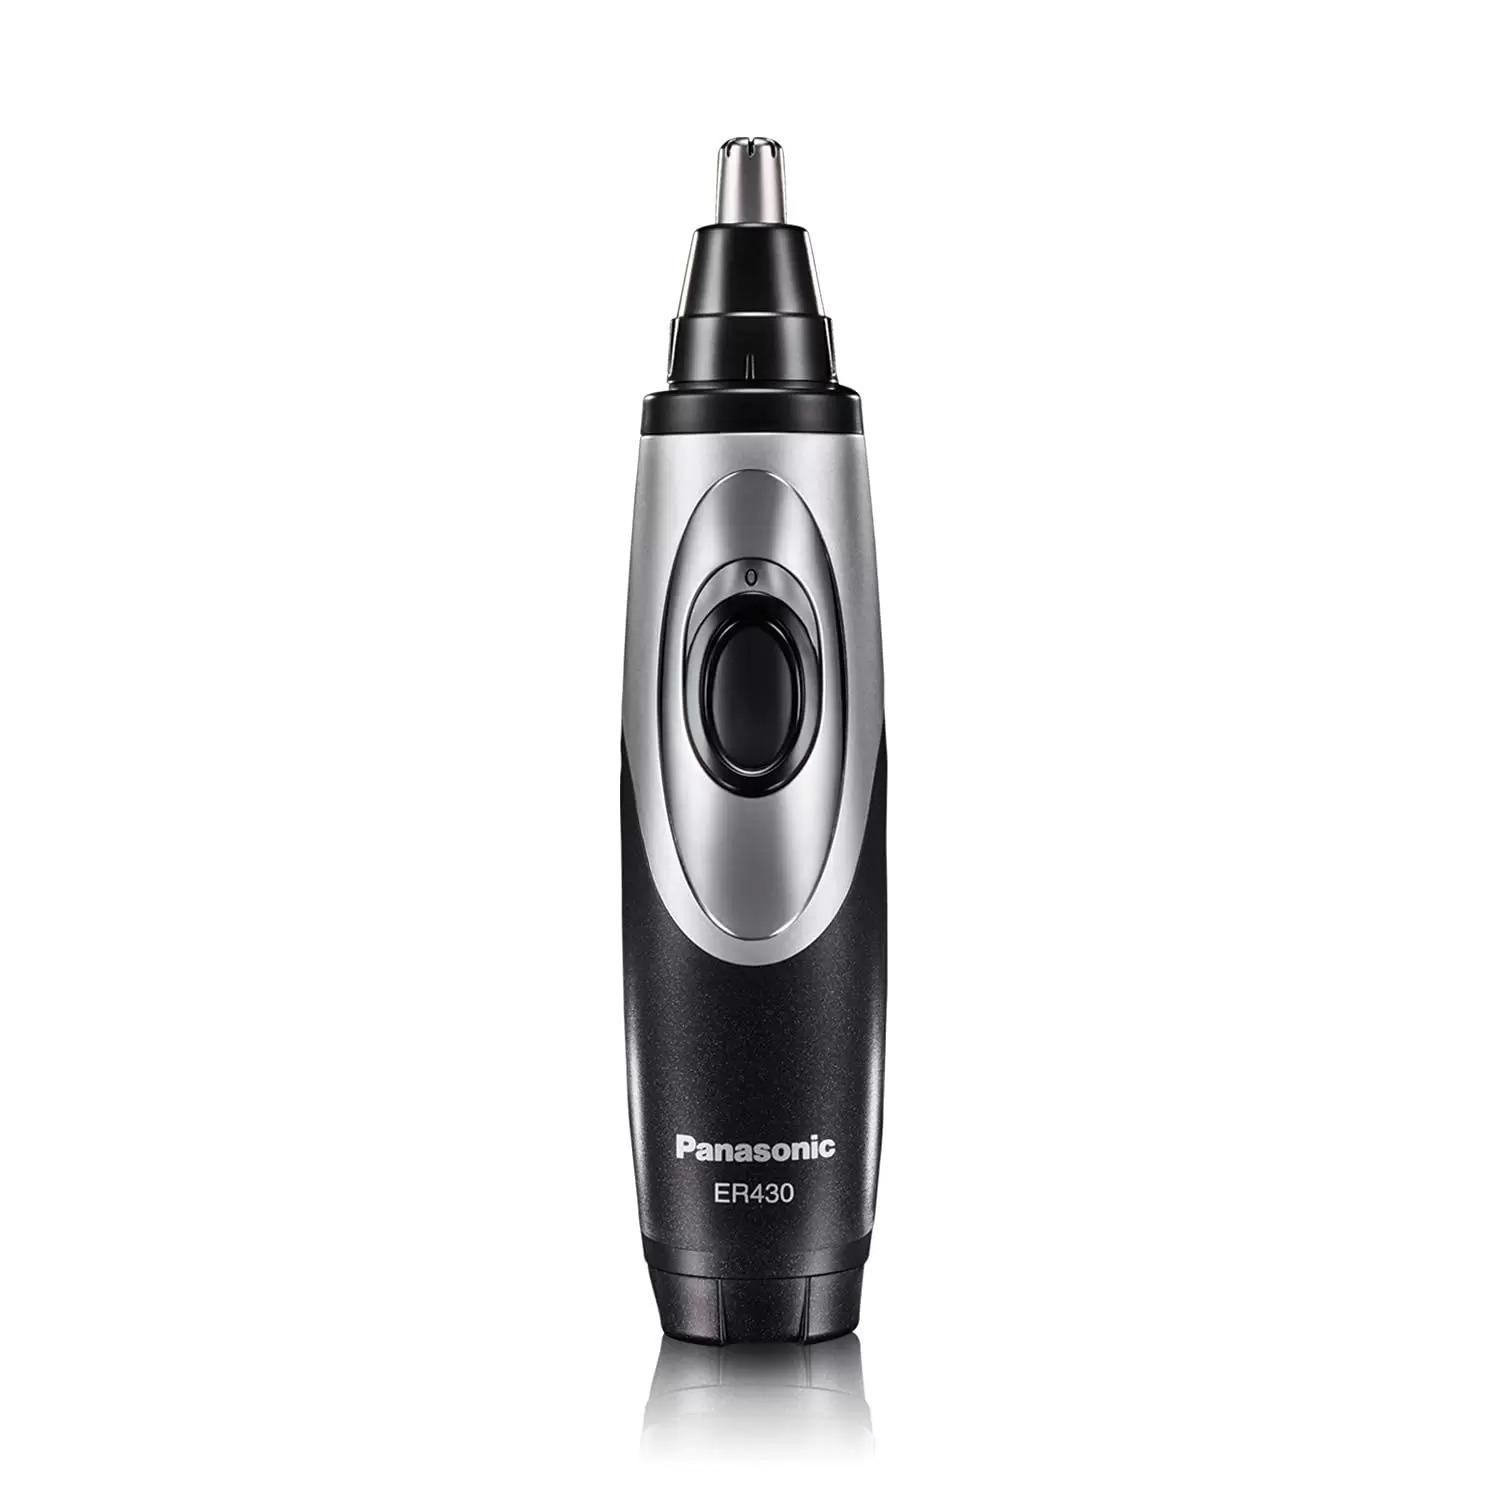 Panasonic Wet Dry Nose Hair Trimmer for $11.37